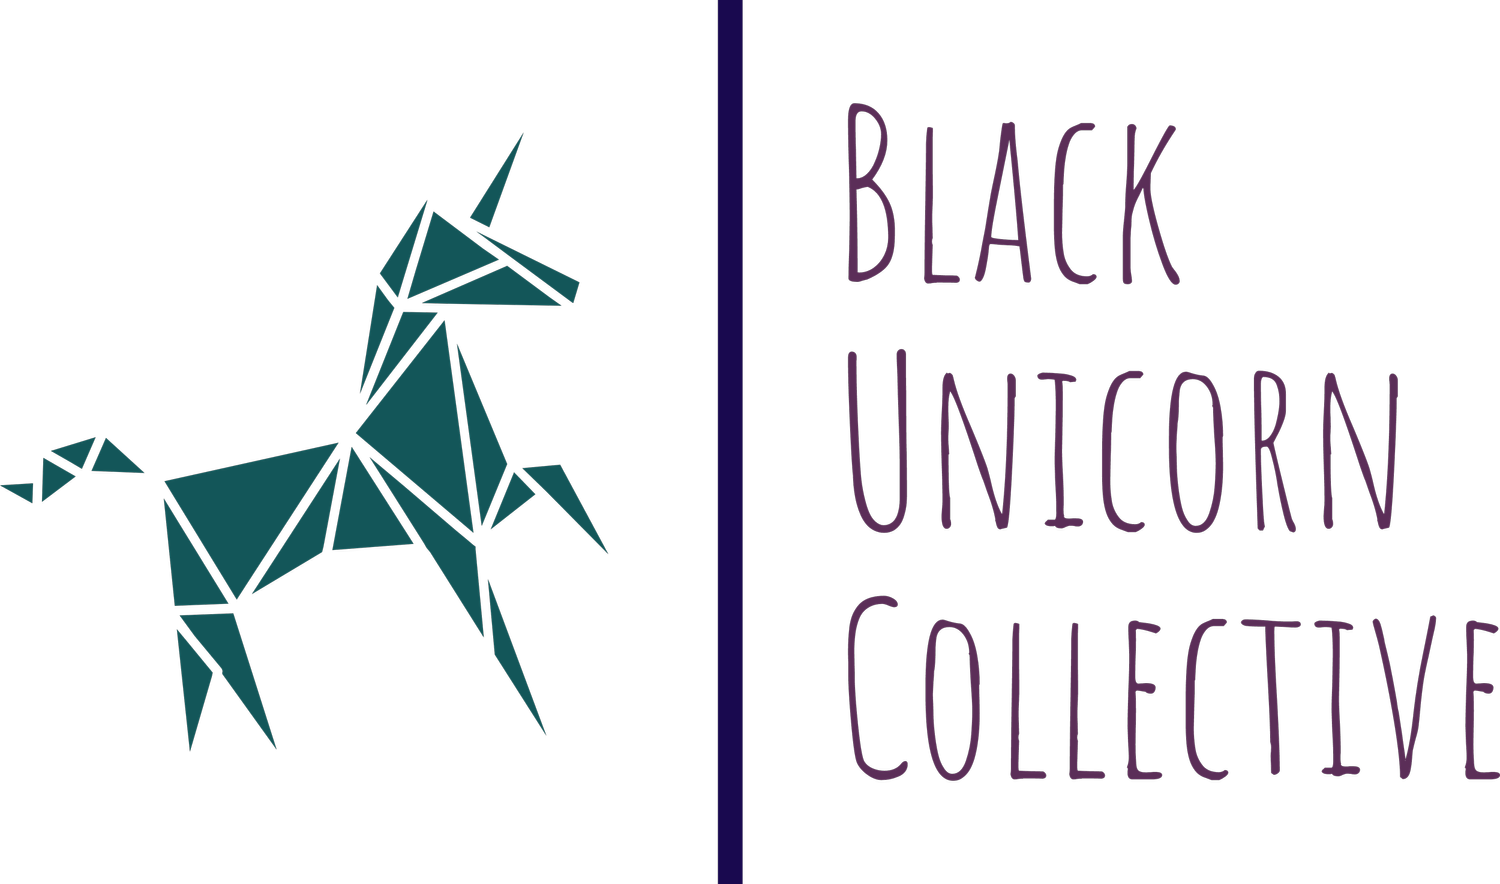 The Black Unicorn Collective